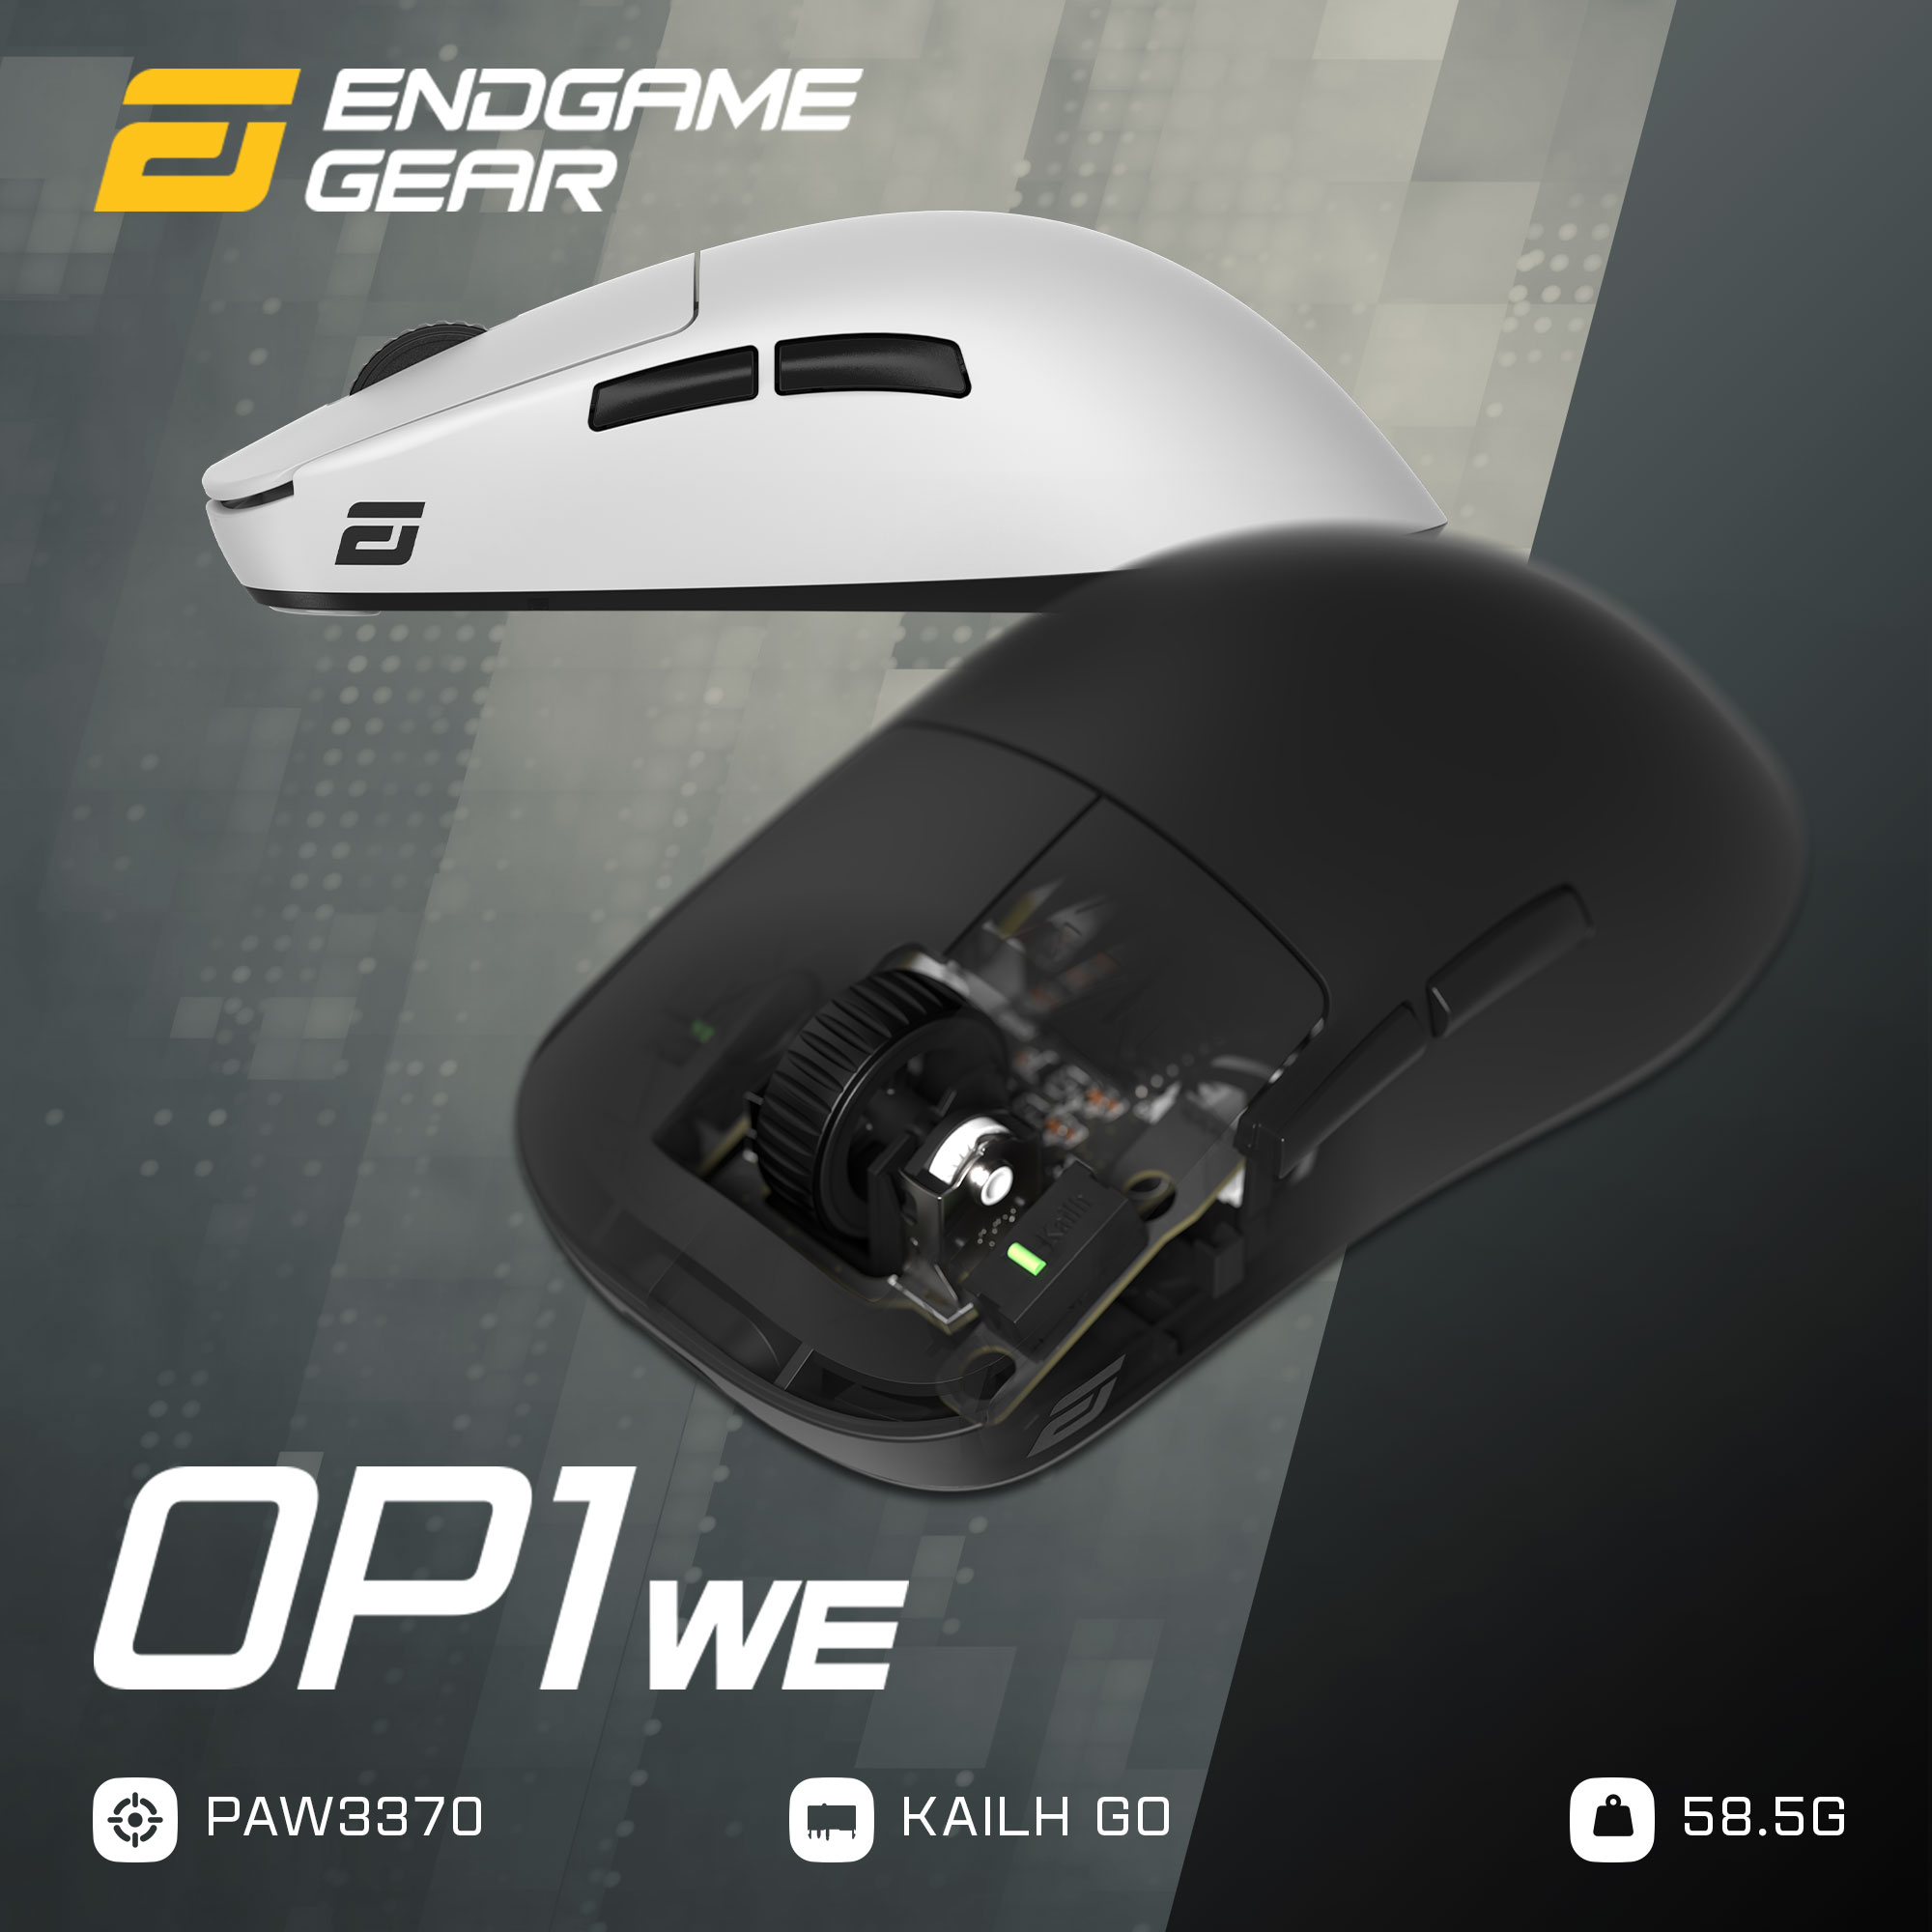 OP1we - Endgame Gear - ゲーミングマウス - 株式会社アーキサイト